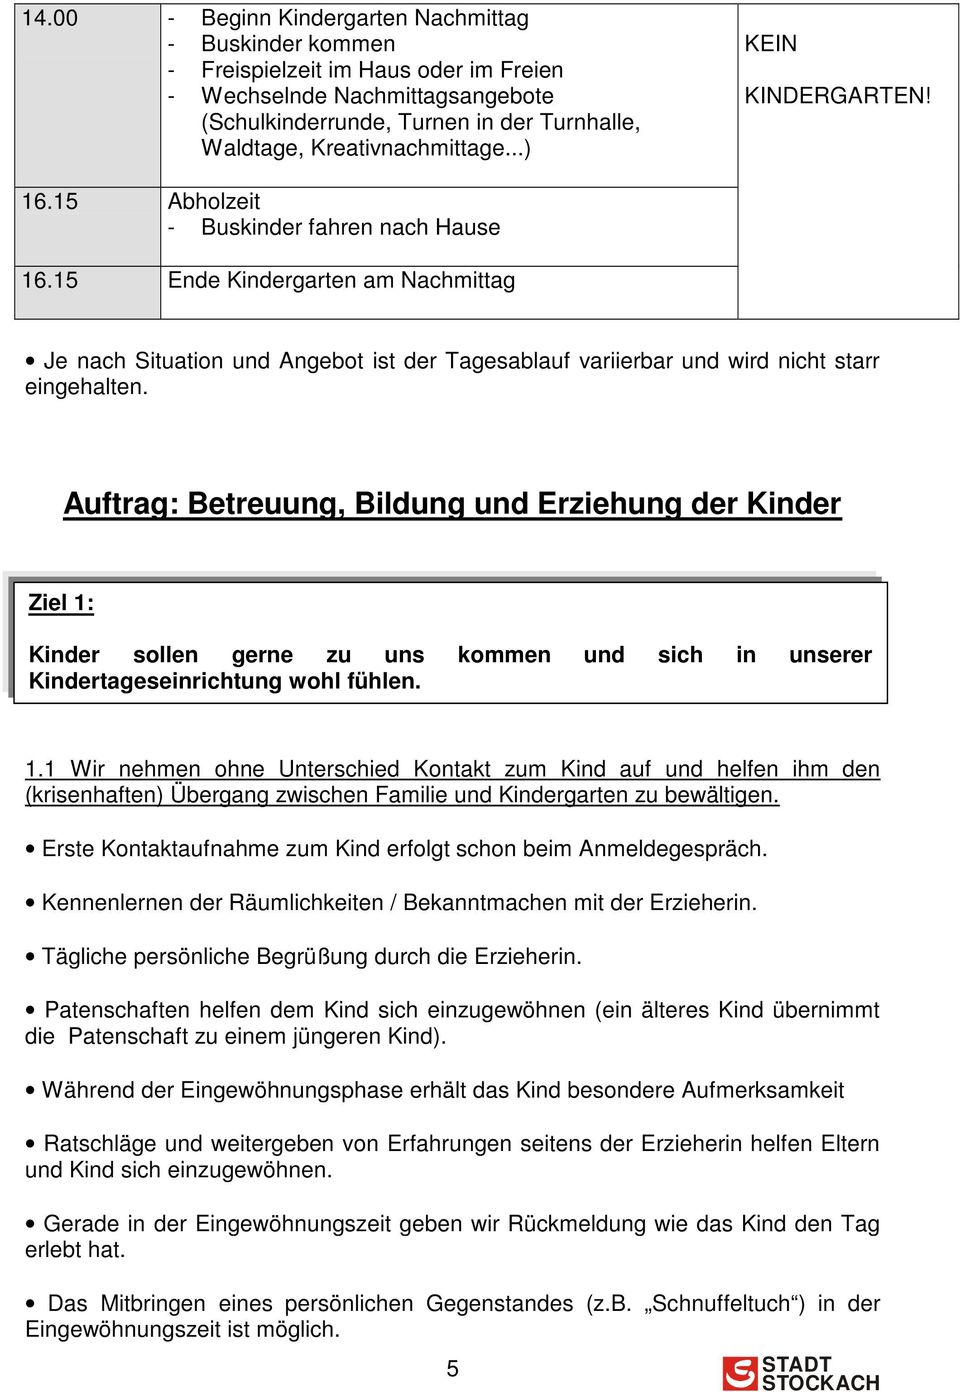 Konzeption Kindergarten Regenbogen Pdf